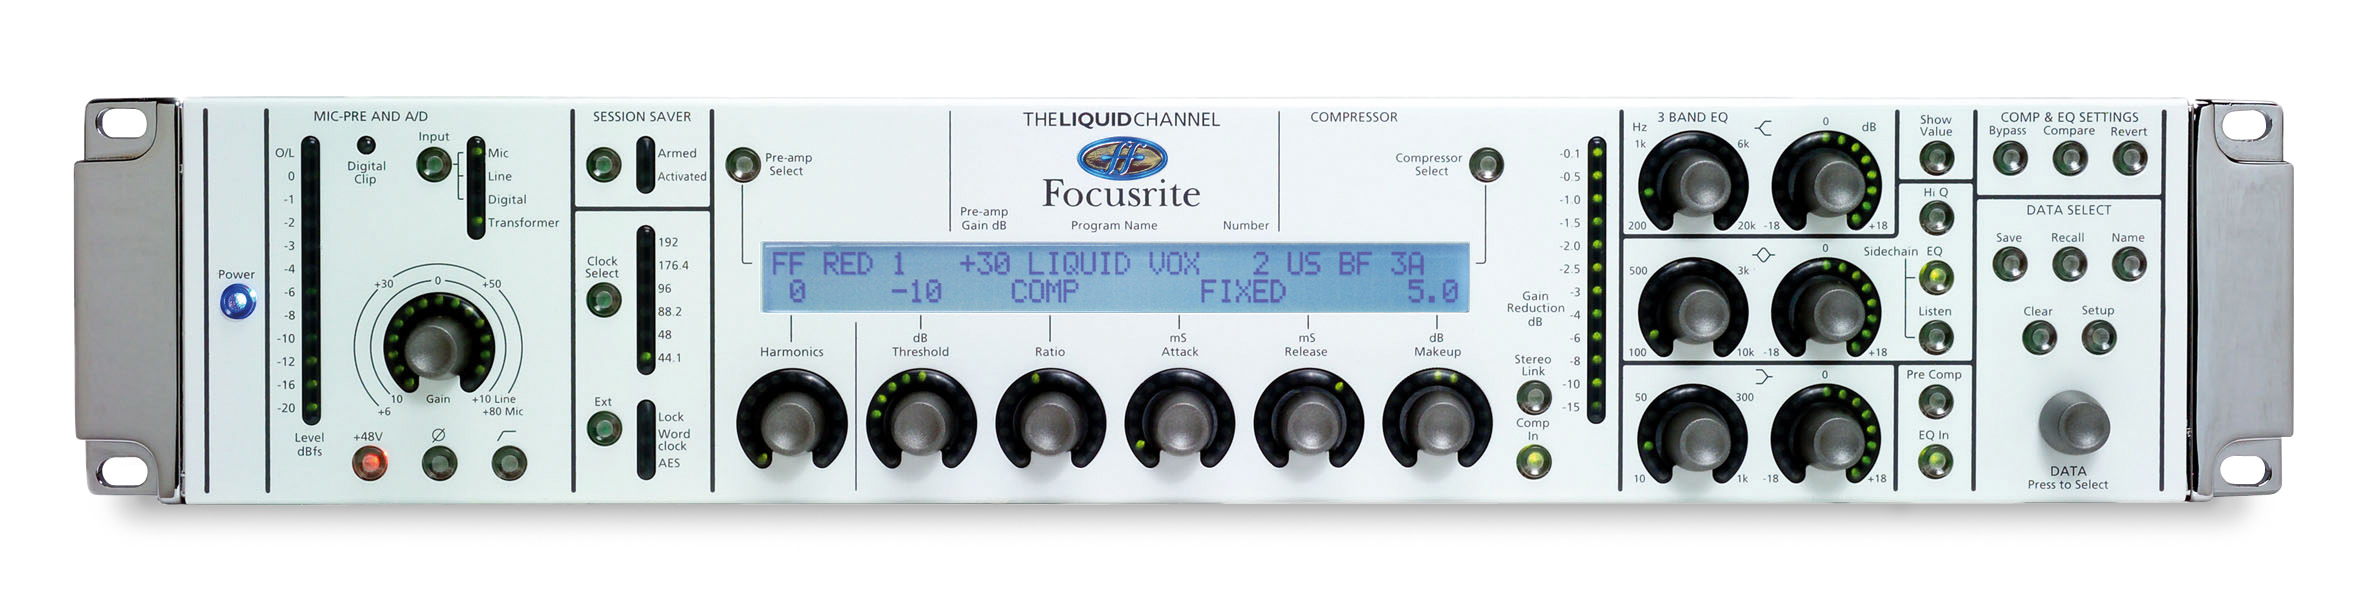 focusrite-liquid-channel-436820.jpg